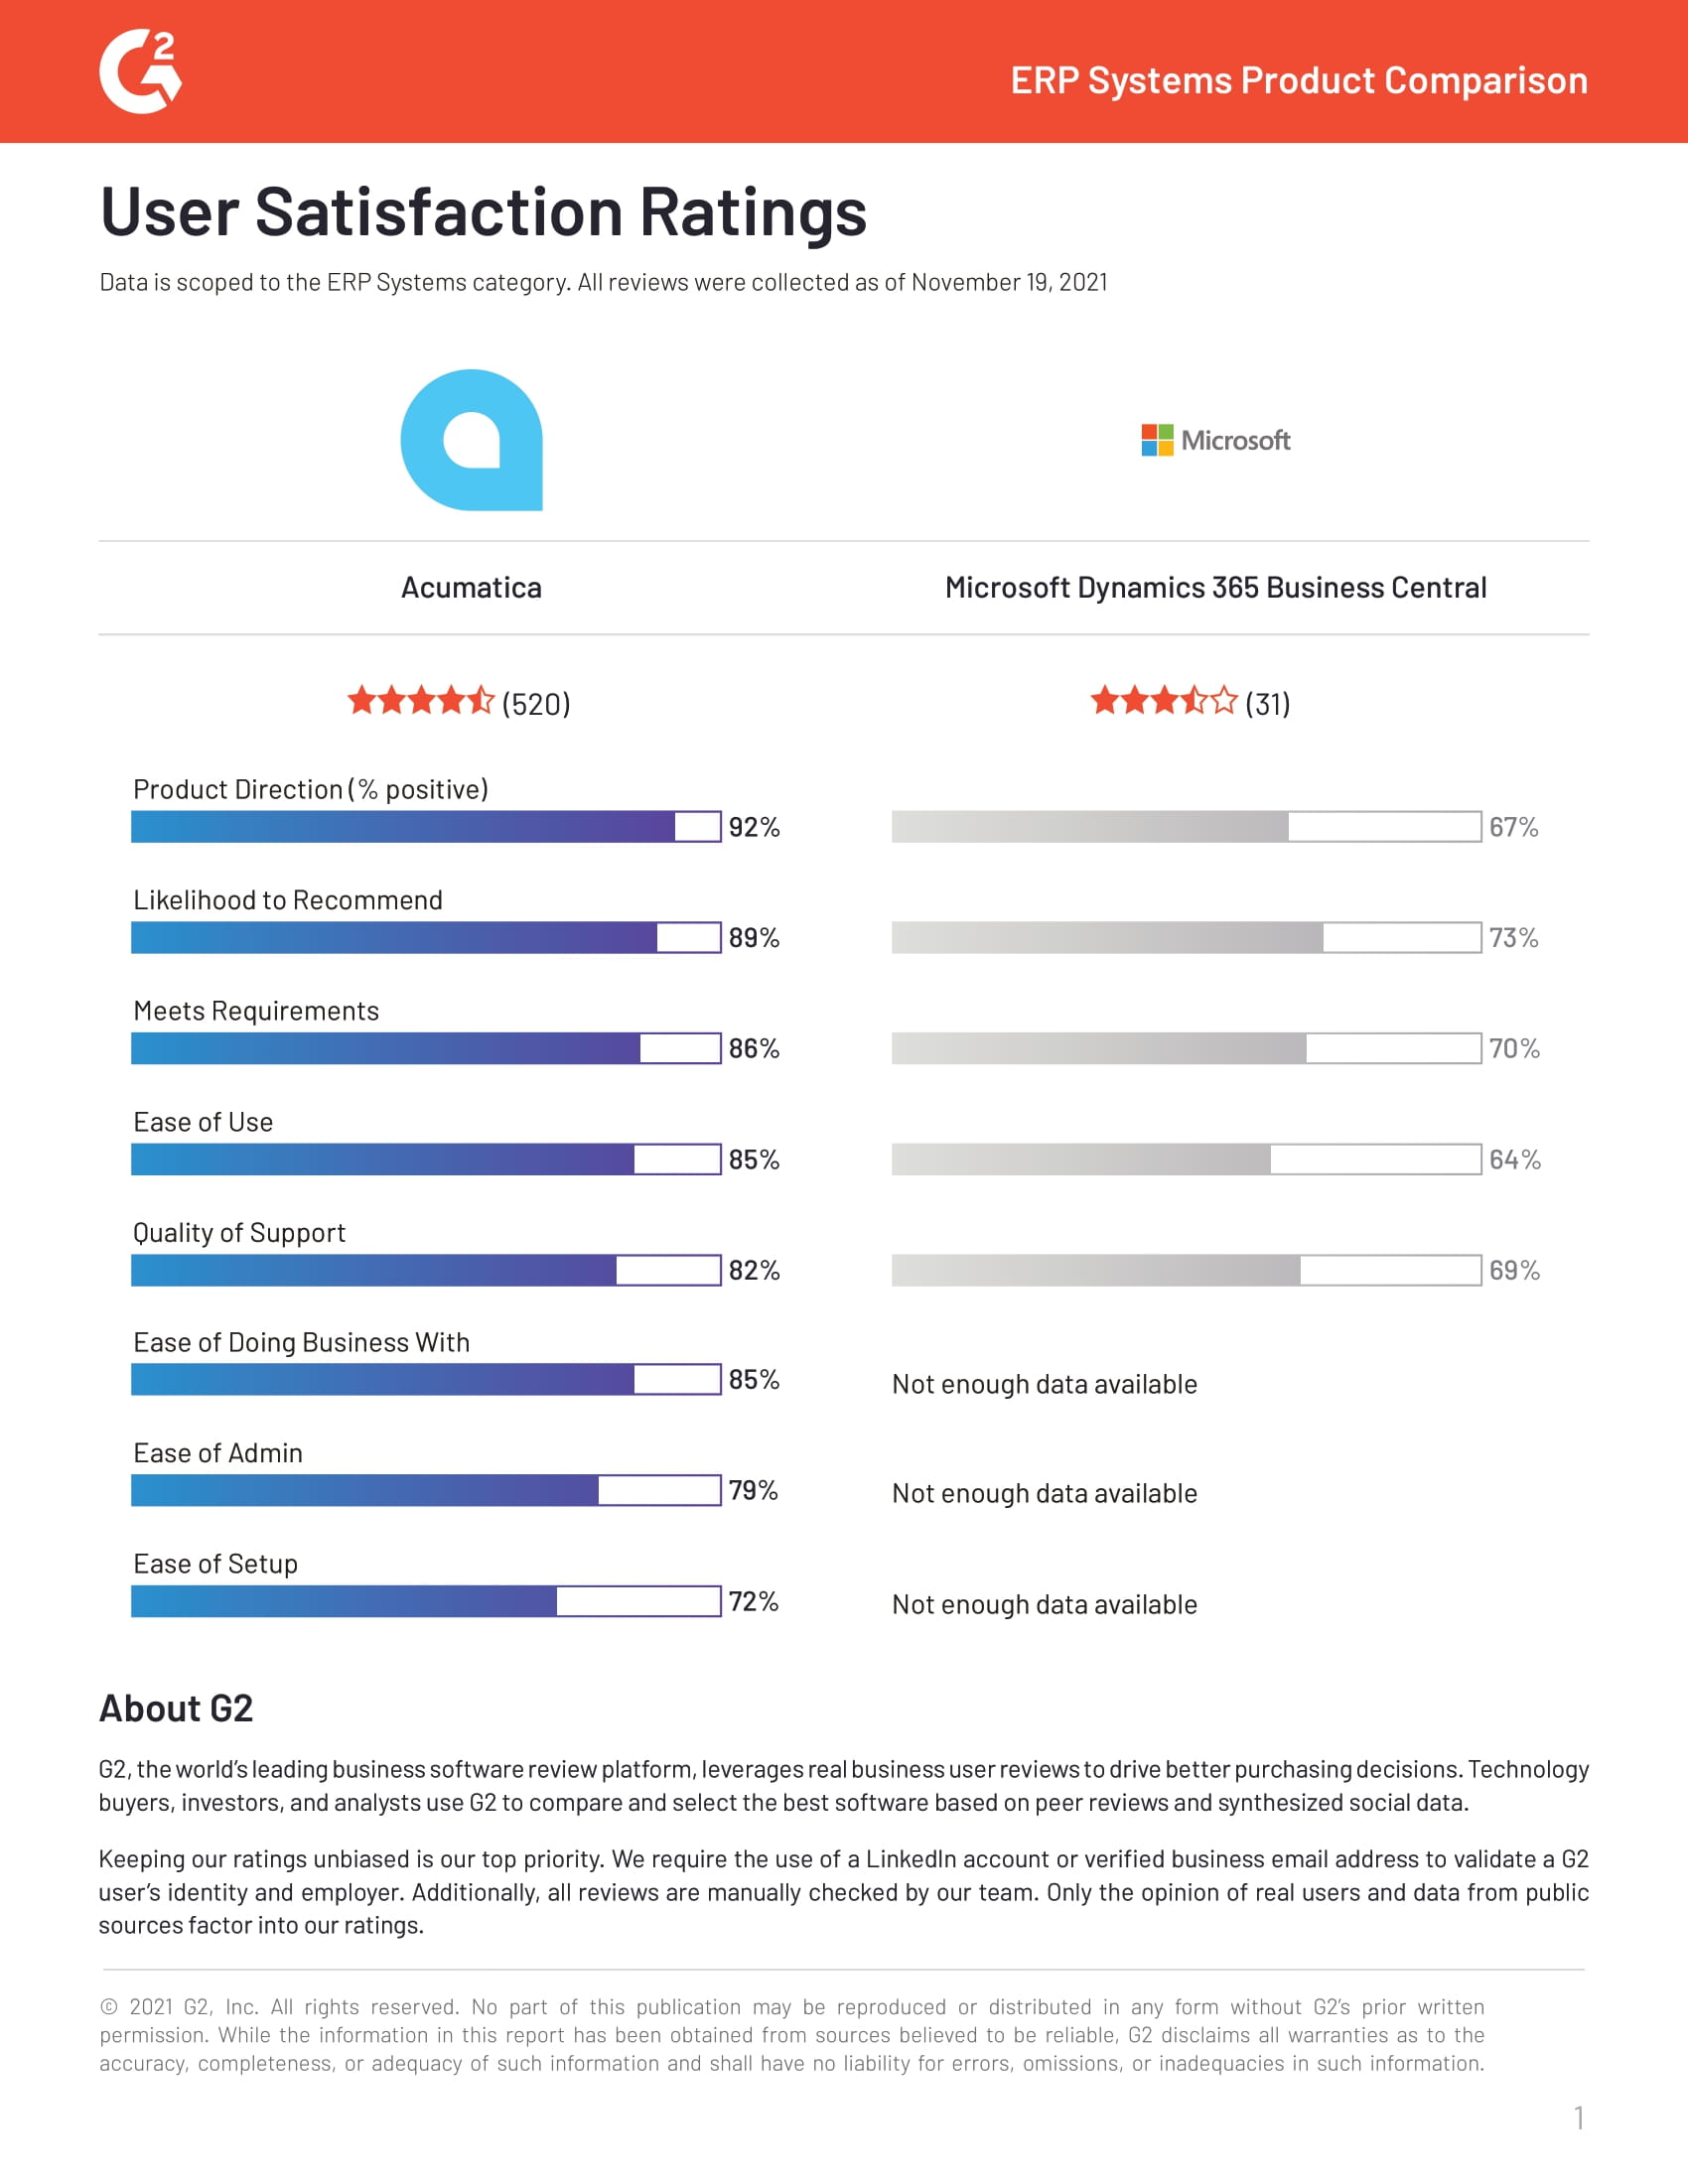 G2 User Satisfaction Ratings 2021 (Microsoft Dynamics)